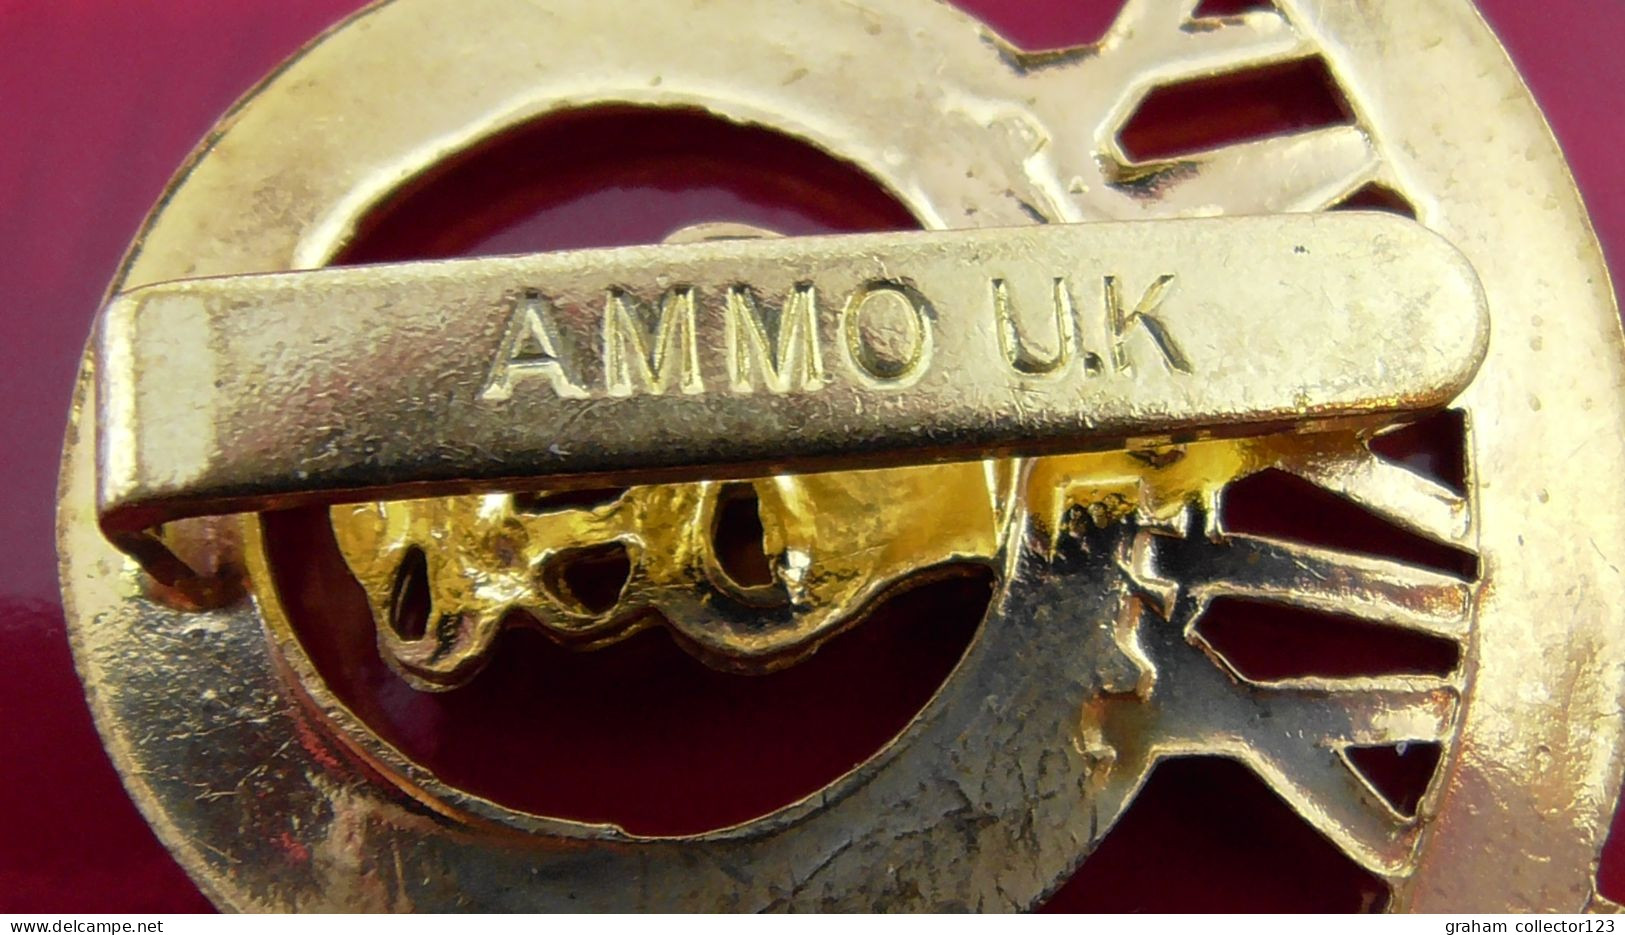 The 15th / 19th Royal Hussars Regiment Modern Copy Metal Badge British Army AMMO UK Manufacturer